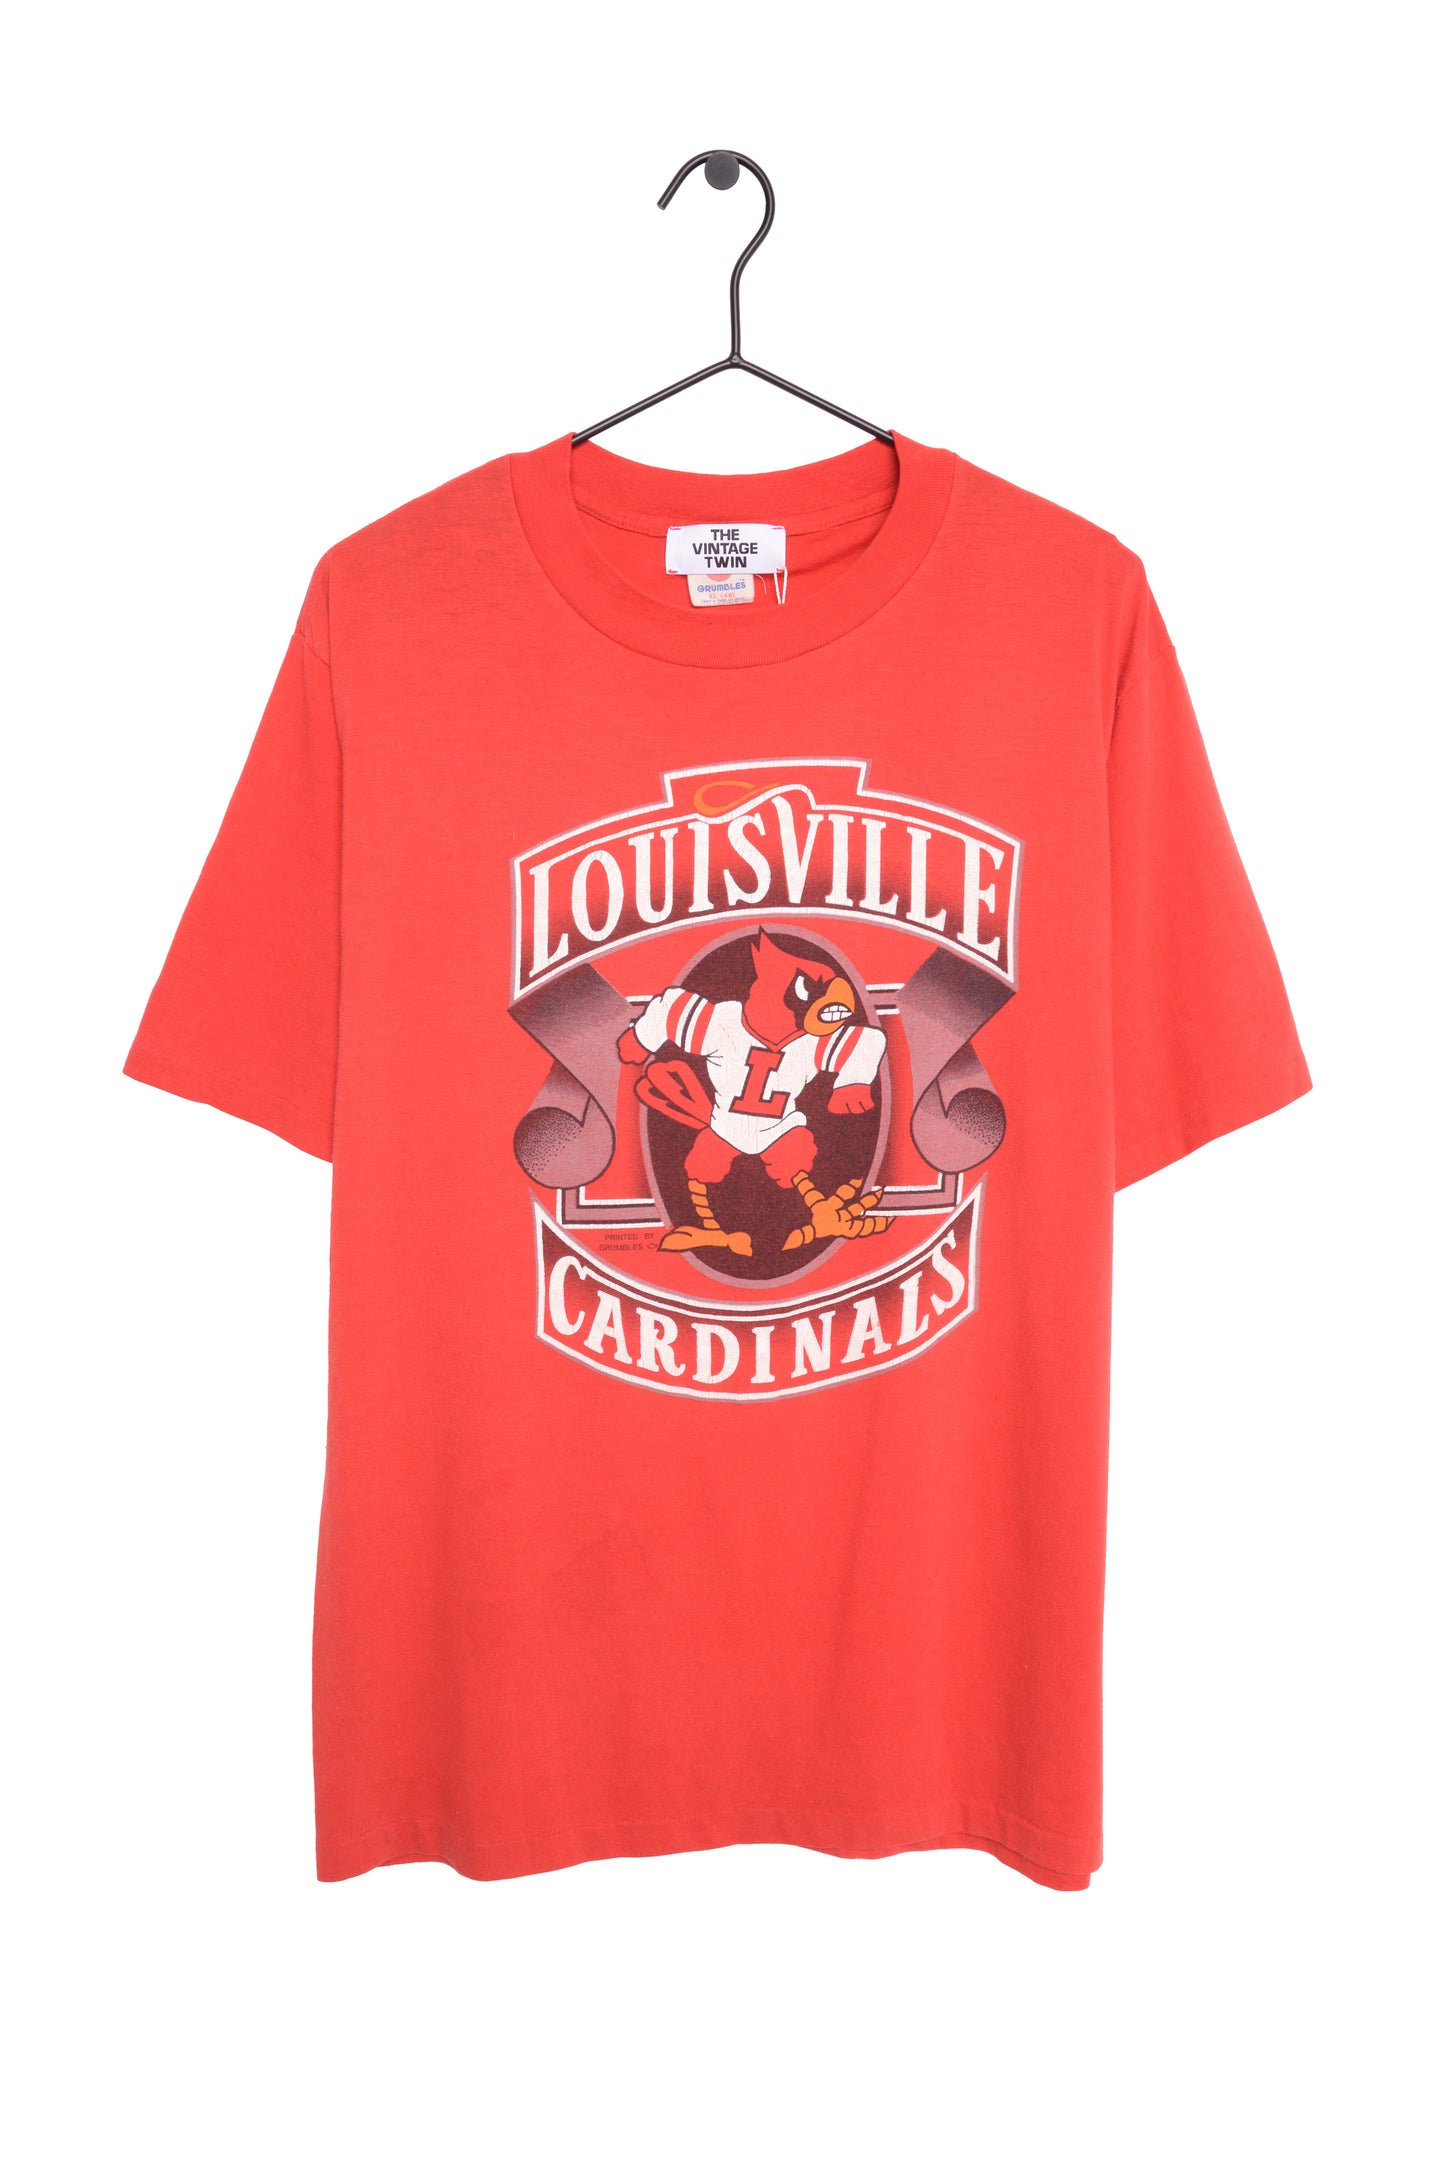 Louisville Cardinals Vintage 1980s Tee